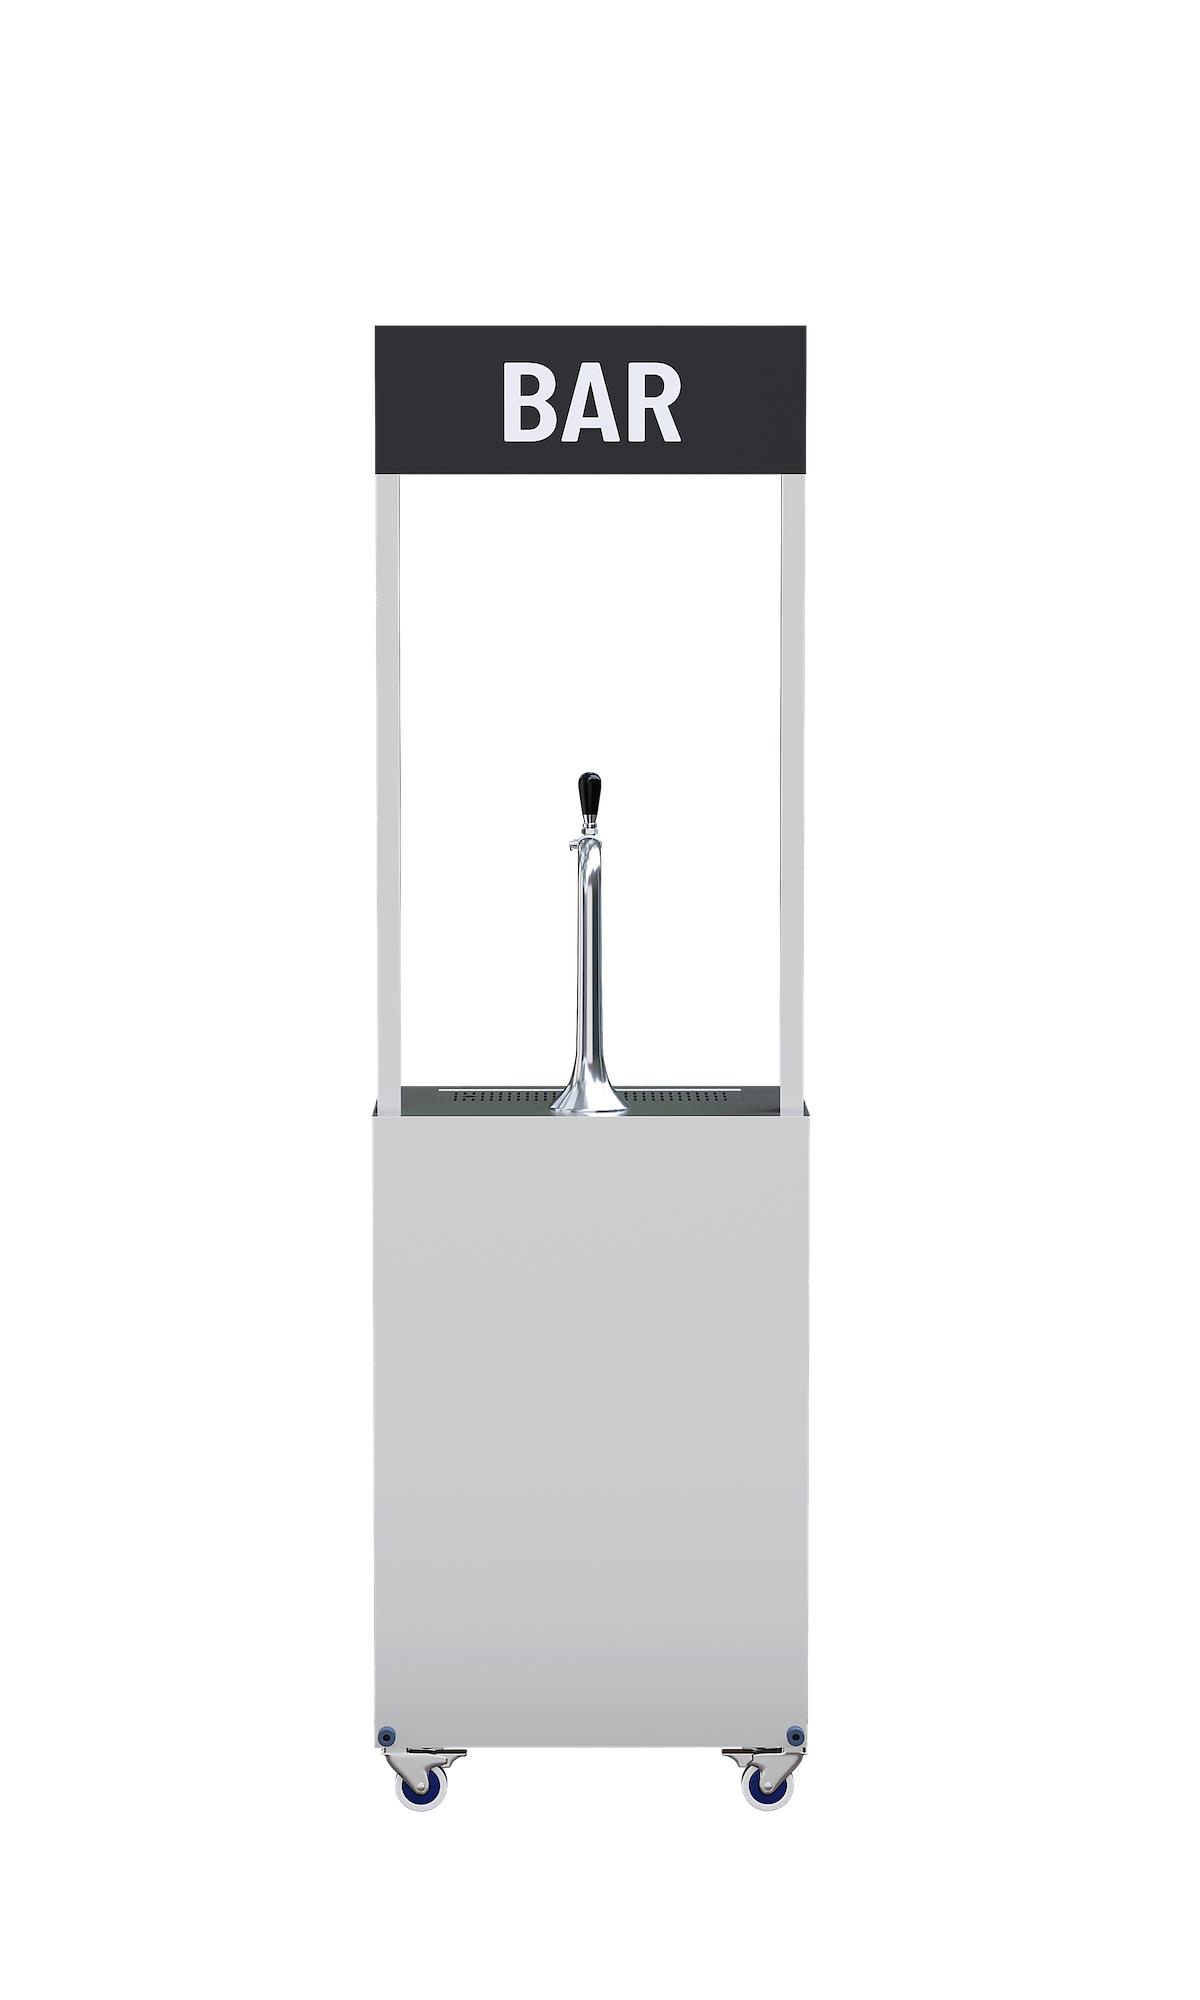 Compact draught beer bar